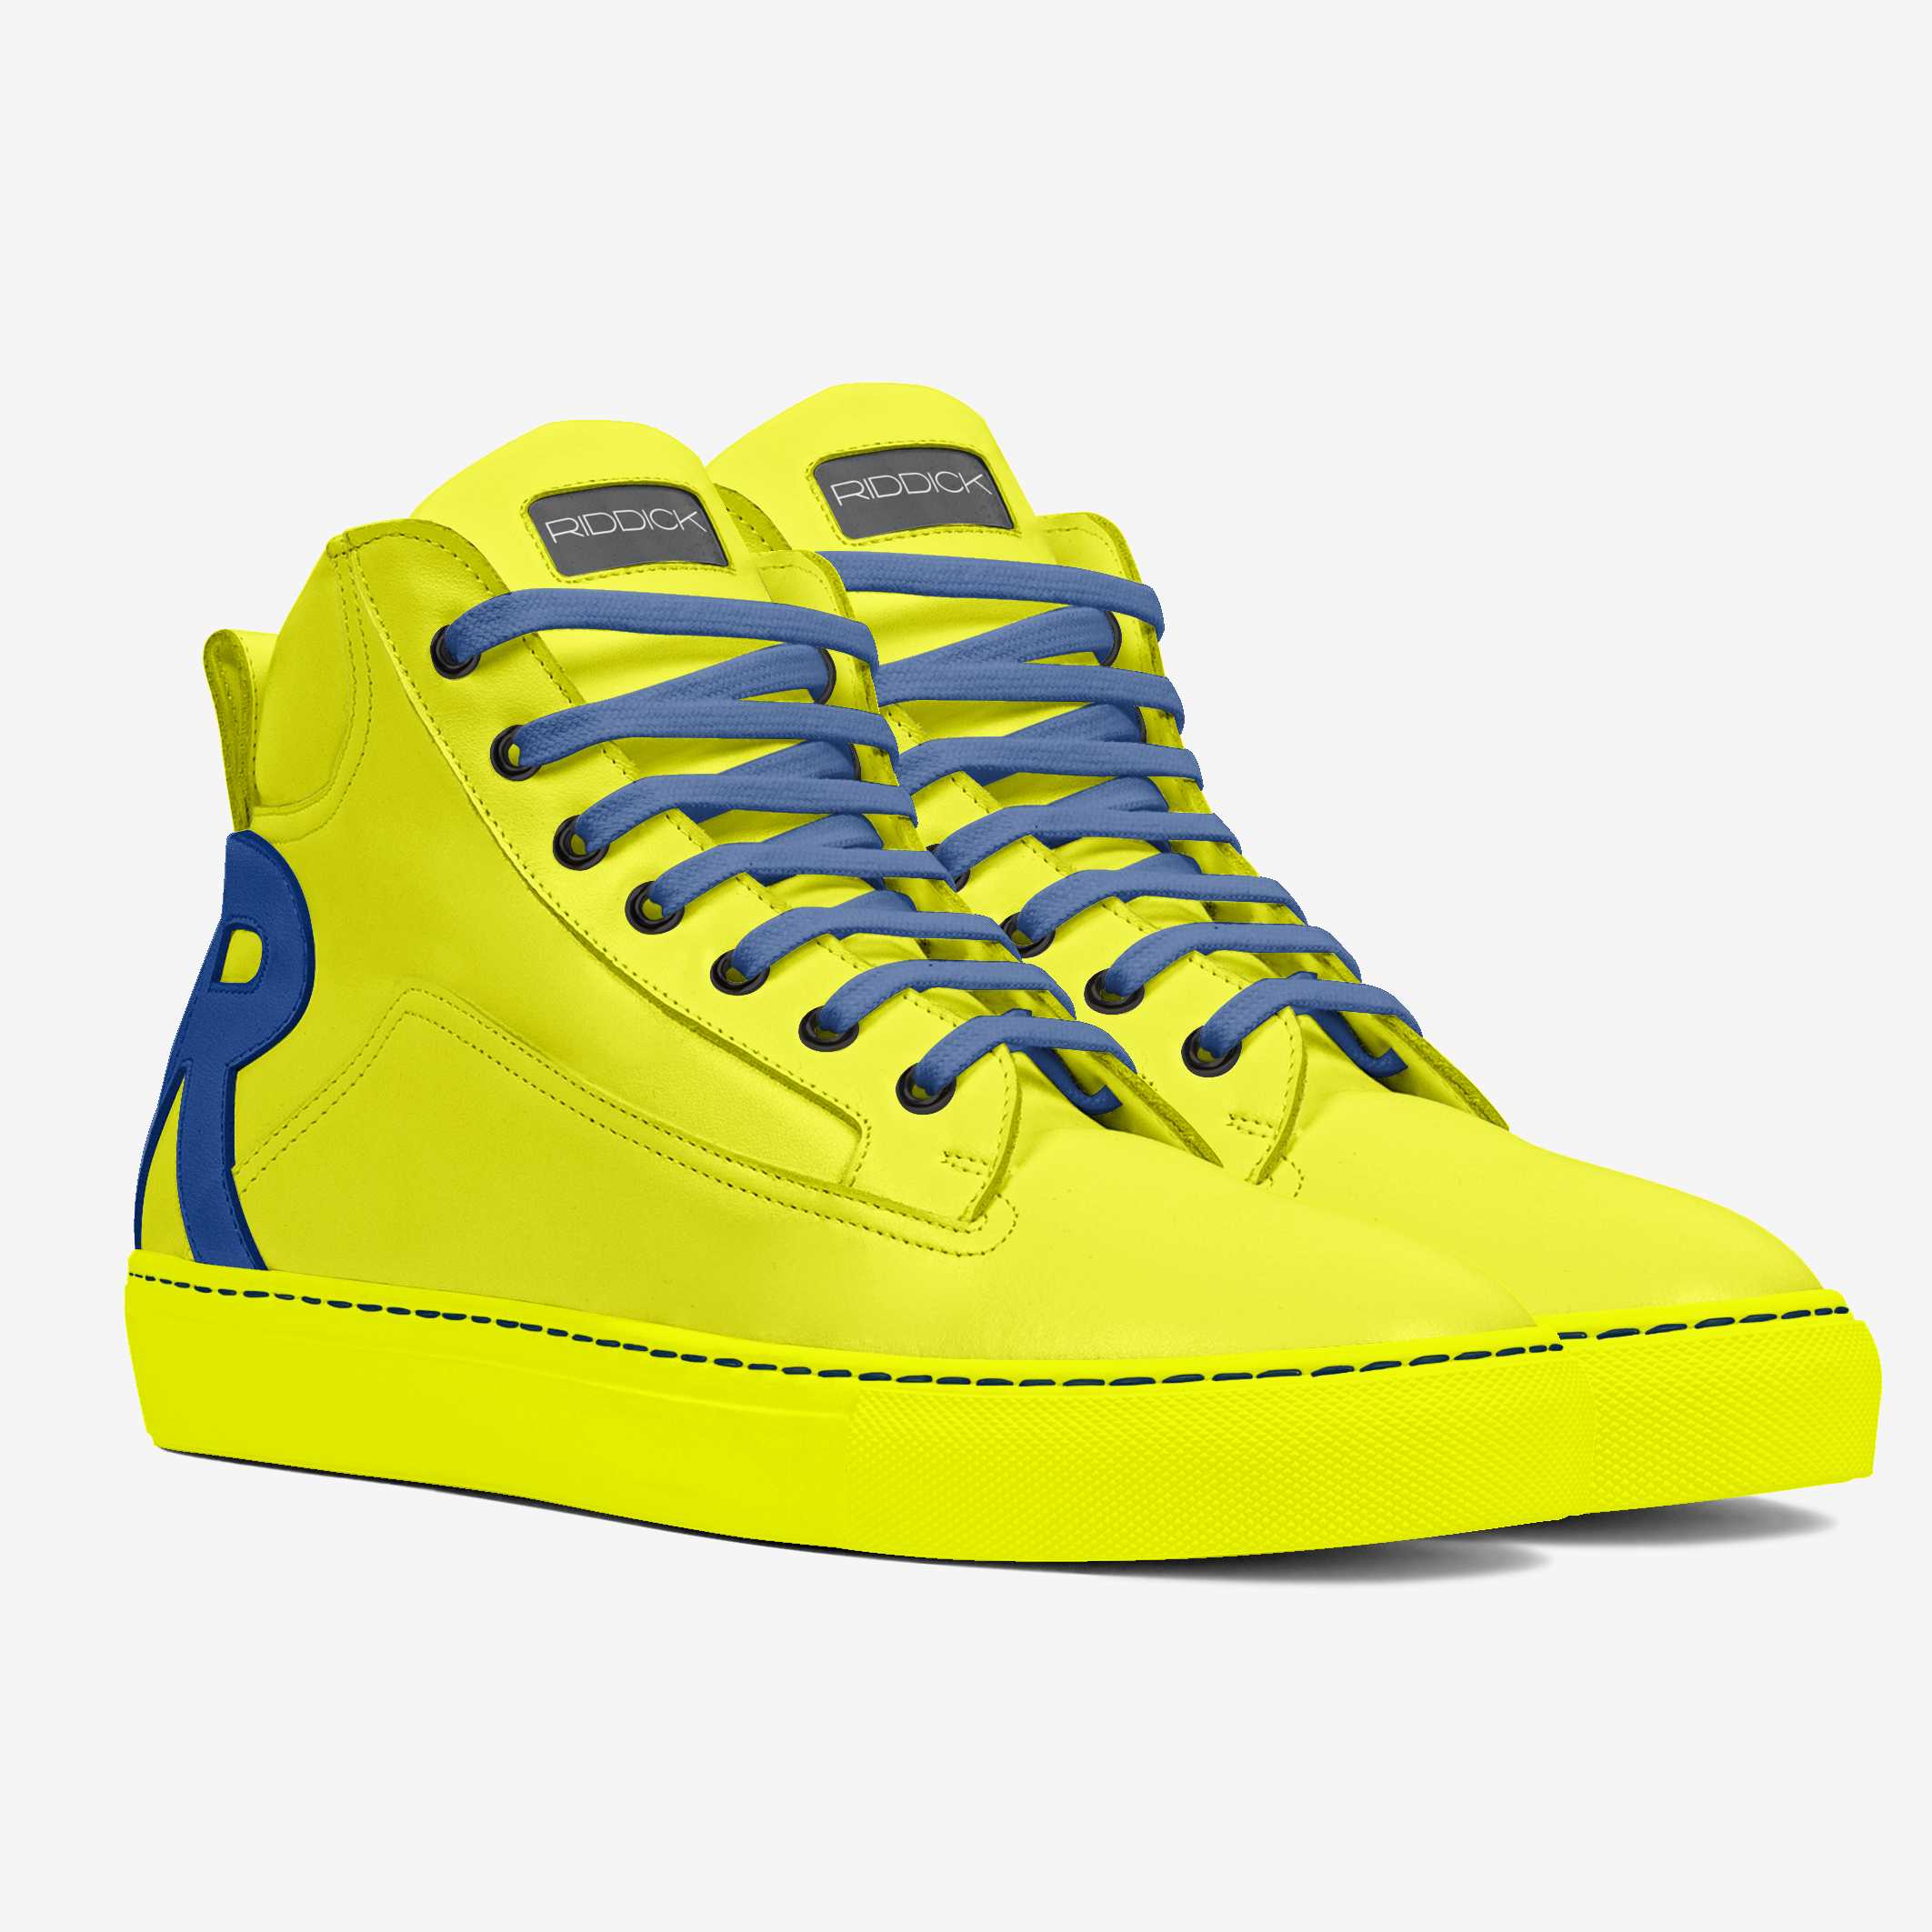 O.G. RIDDICK [Yellow Silicon] - Riddick Shoes Shoe Riddick Shoes   